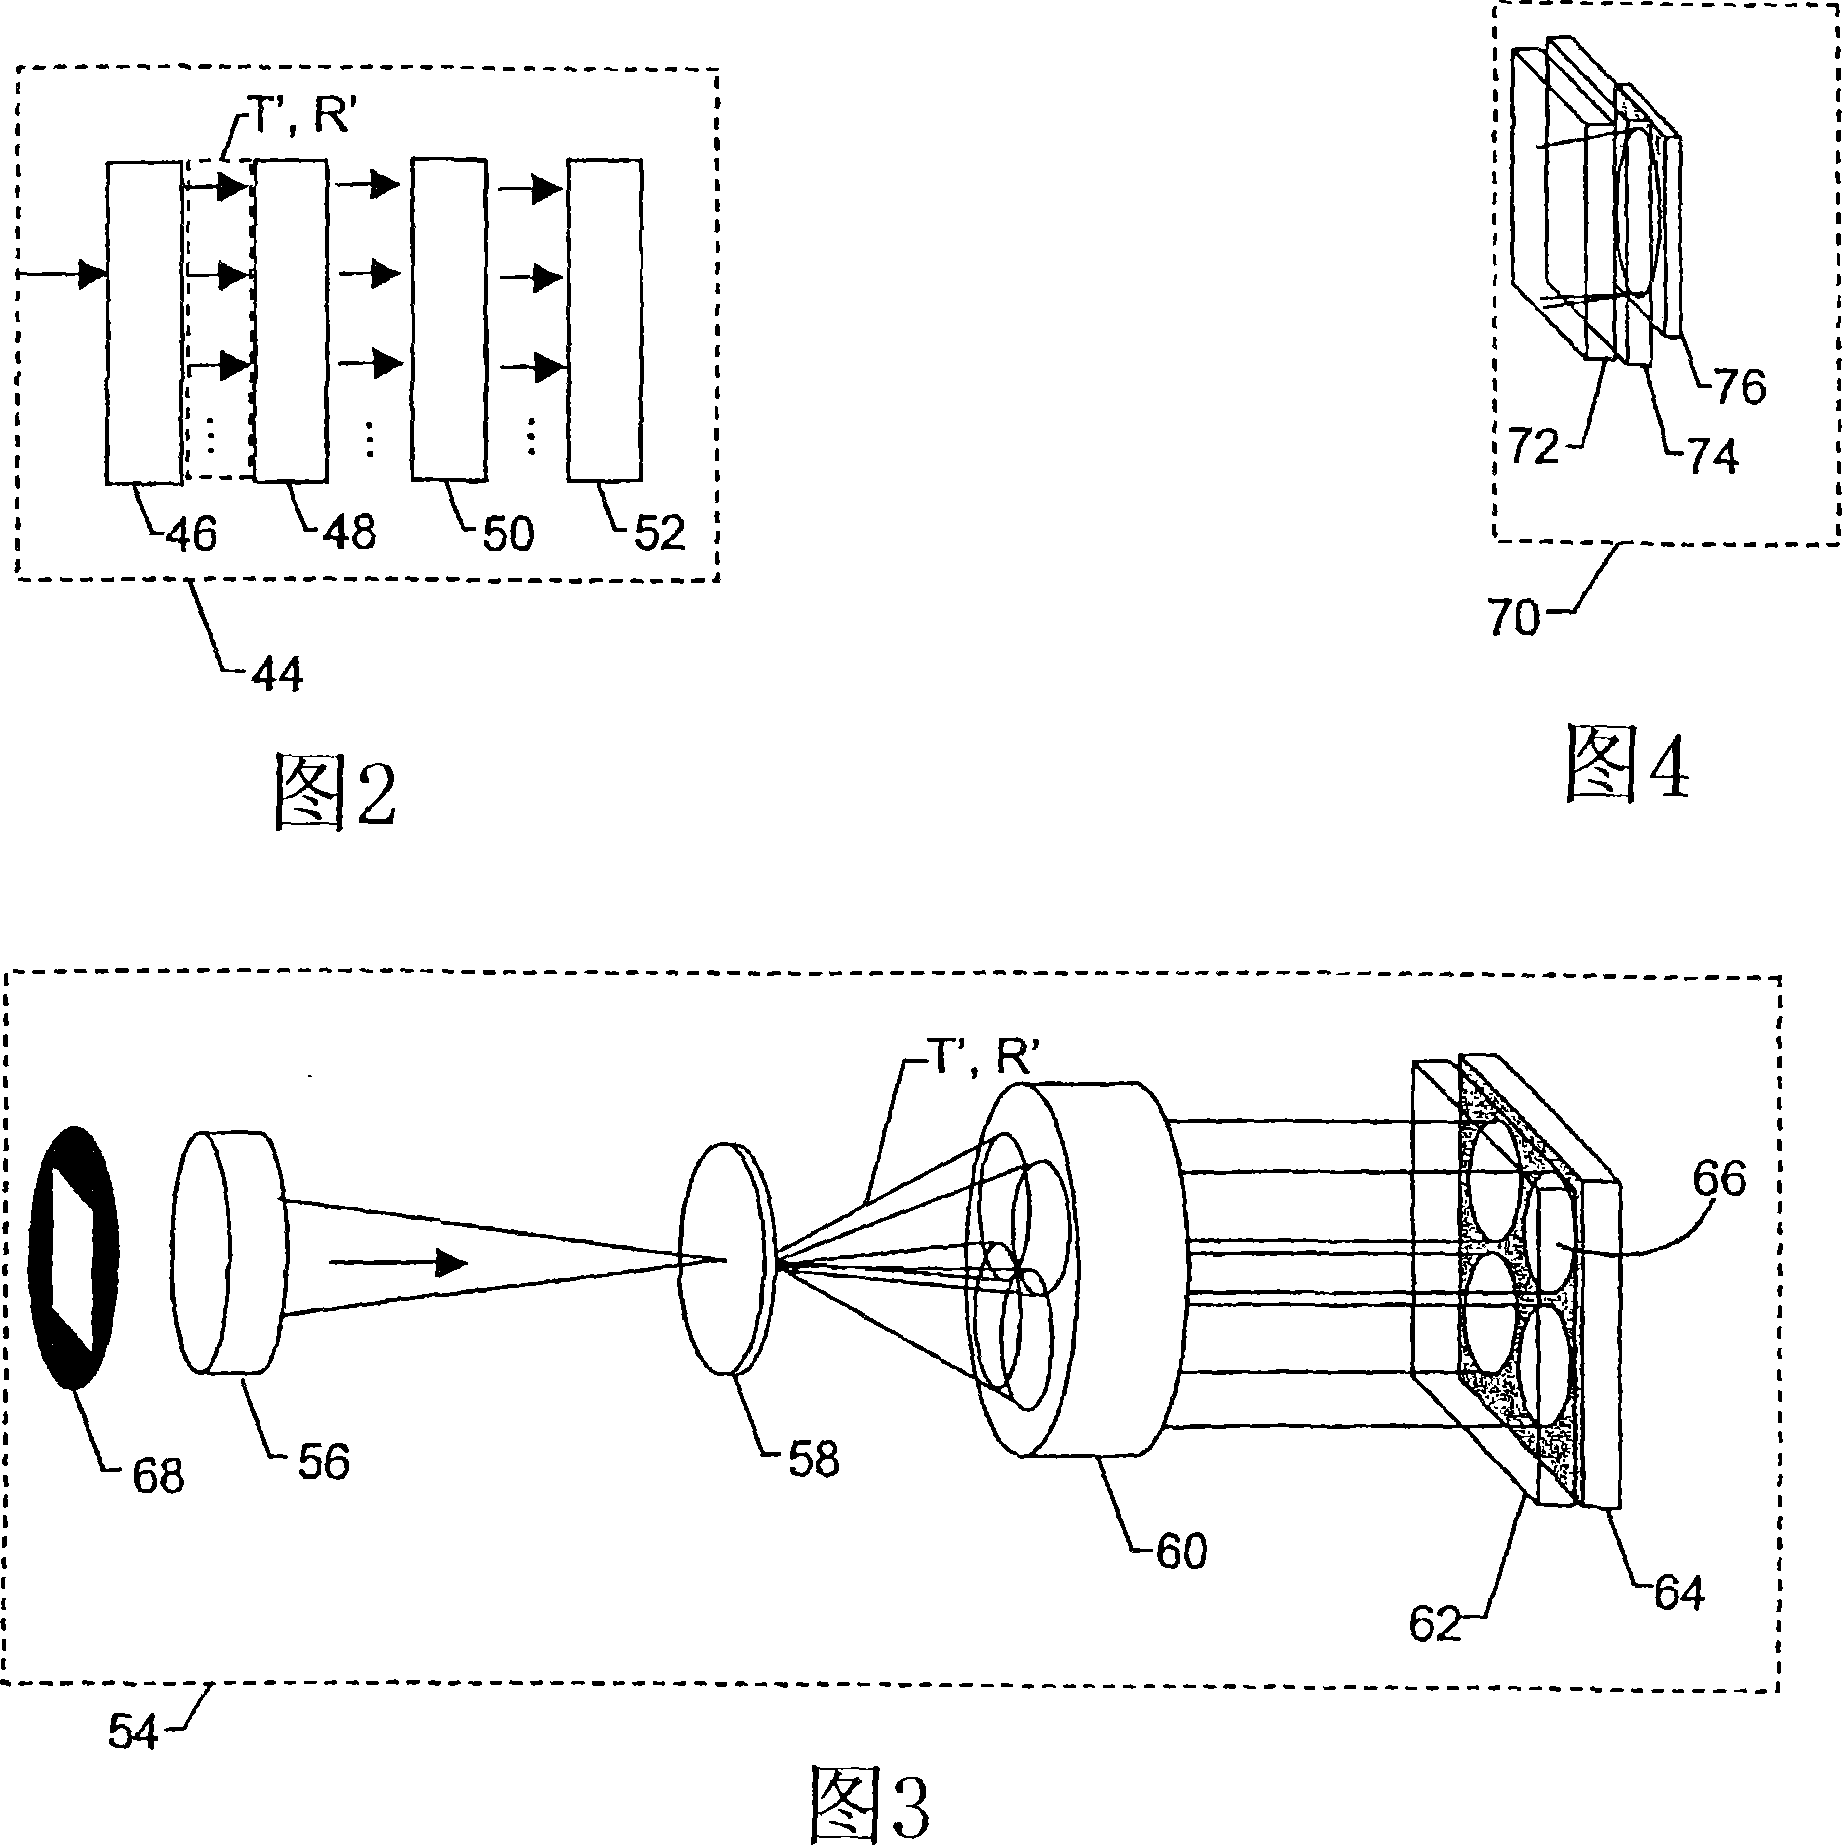 Fizeau interferomenter with simultaneous phase shift